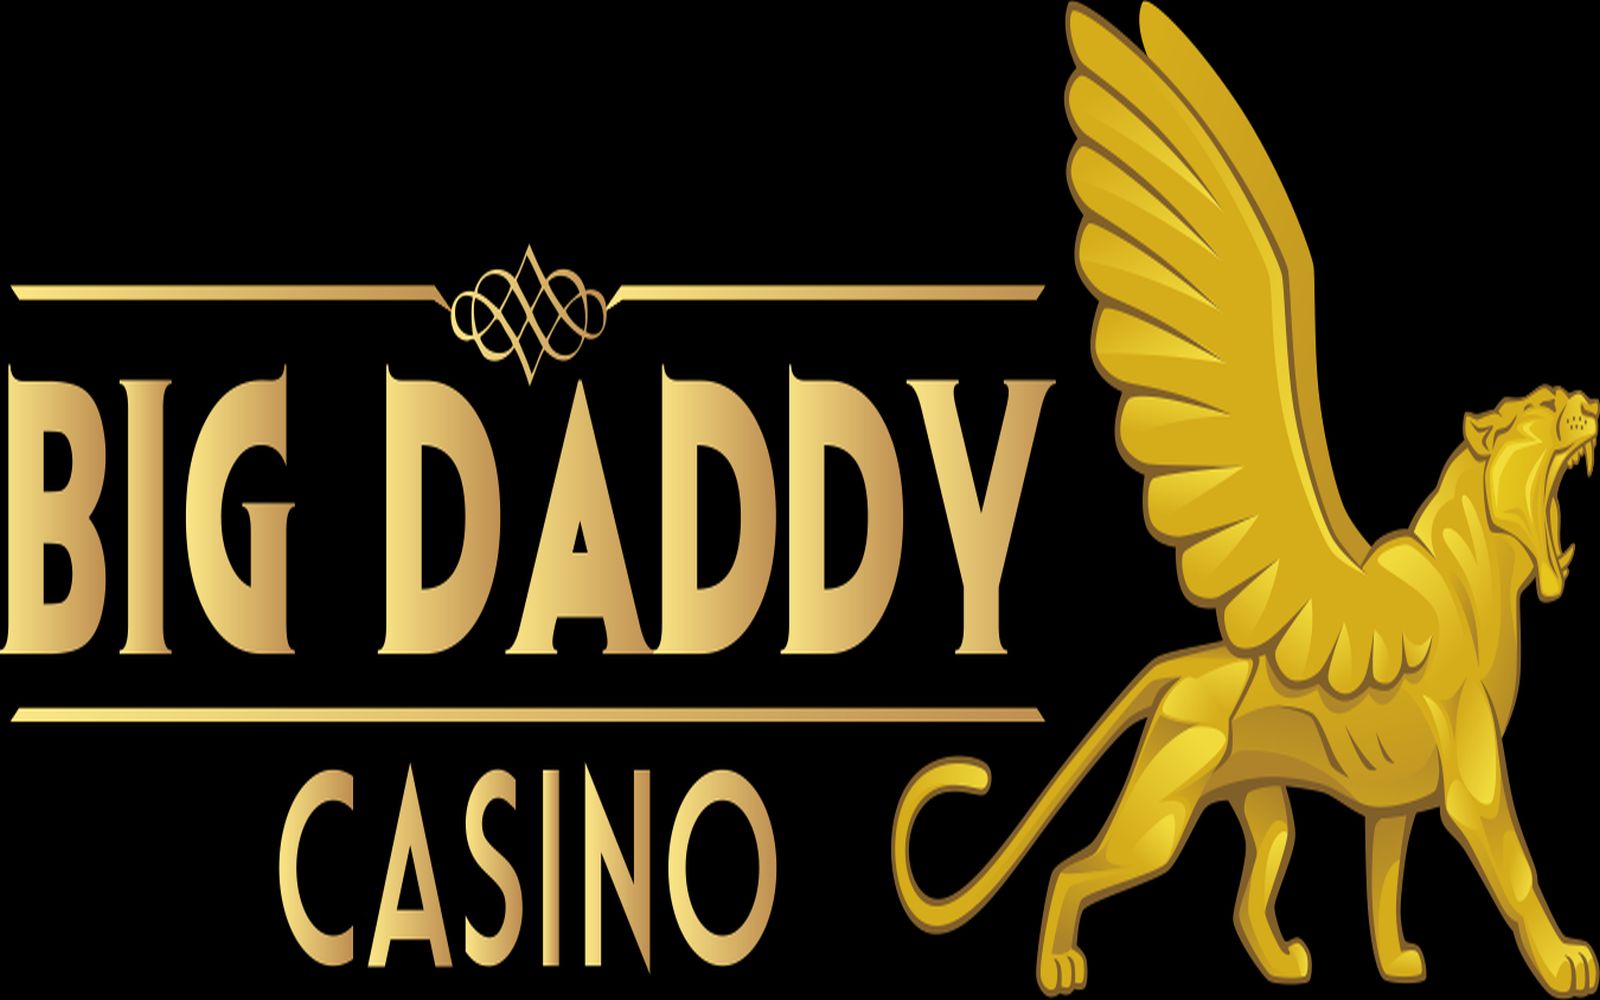 big daddy casino dan bilzerian